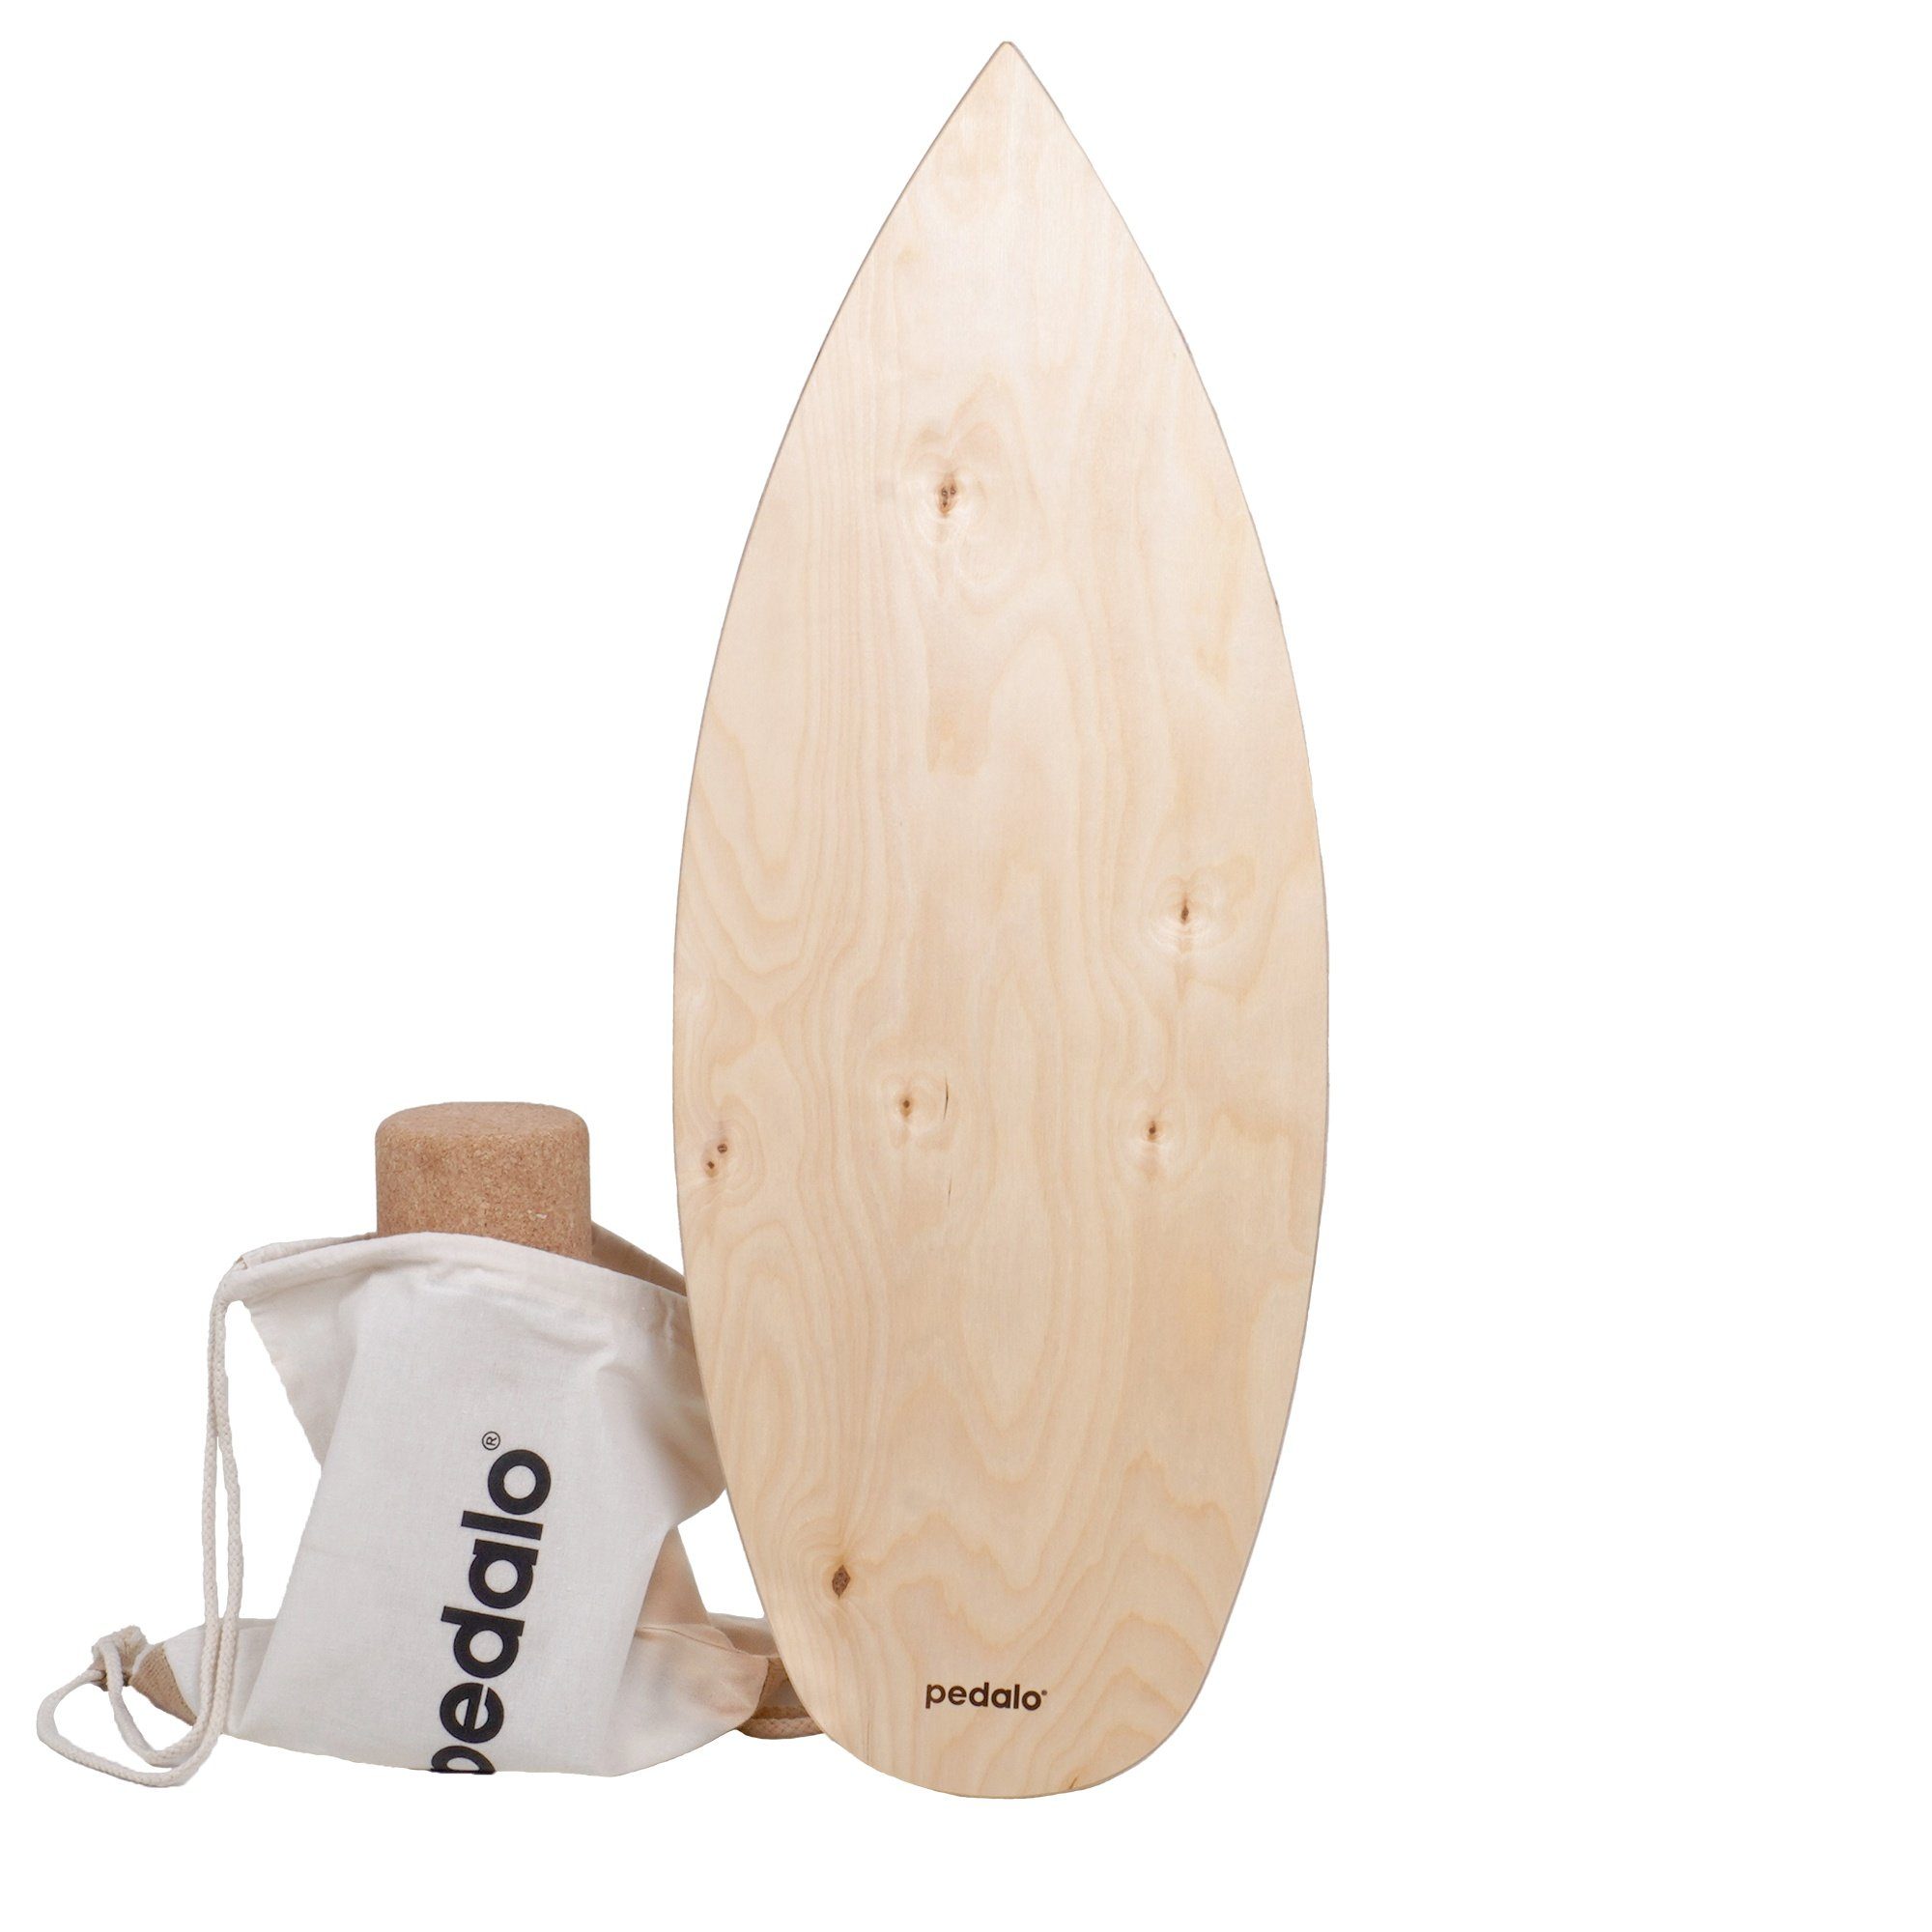 Koordinationstrainer, pedalo® Balanceboard Gleichgewichtstrainer Pur stabil, Balance Faszien cm, Holz Board Korkrolle Oberfläche 10 inkl. Board